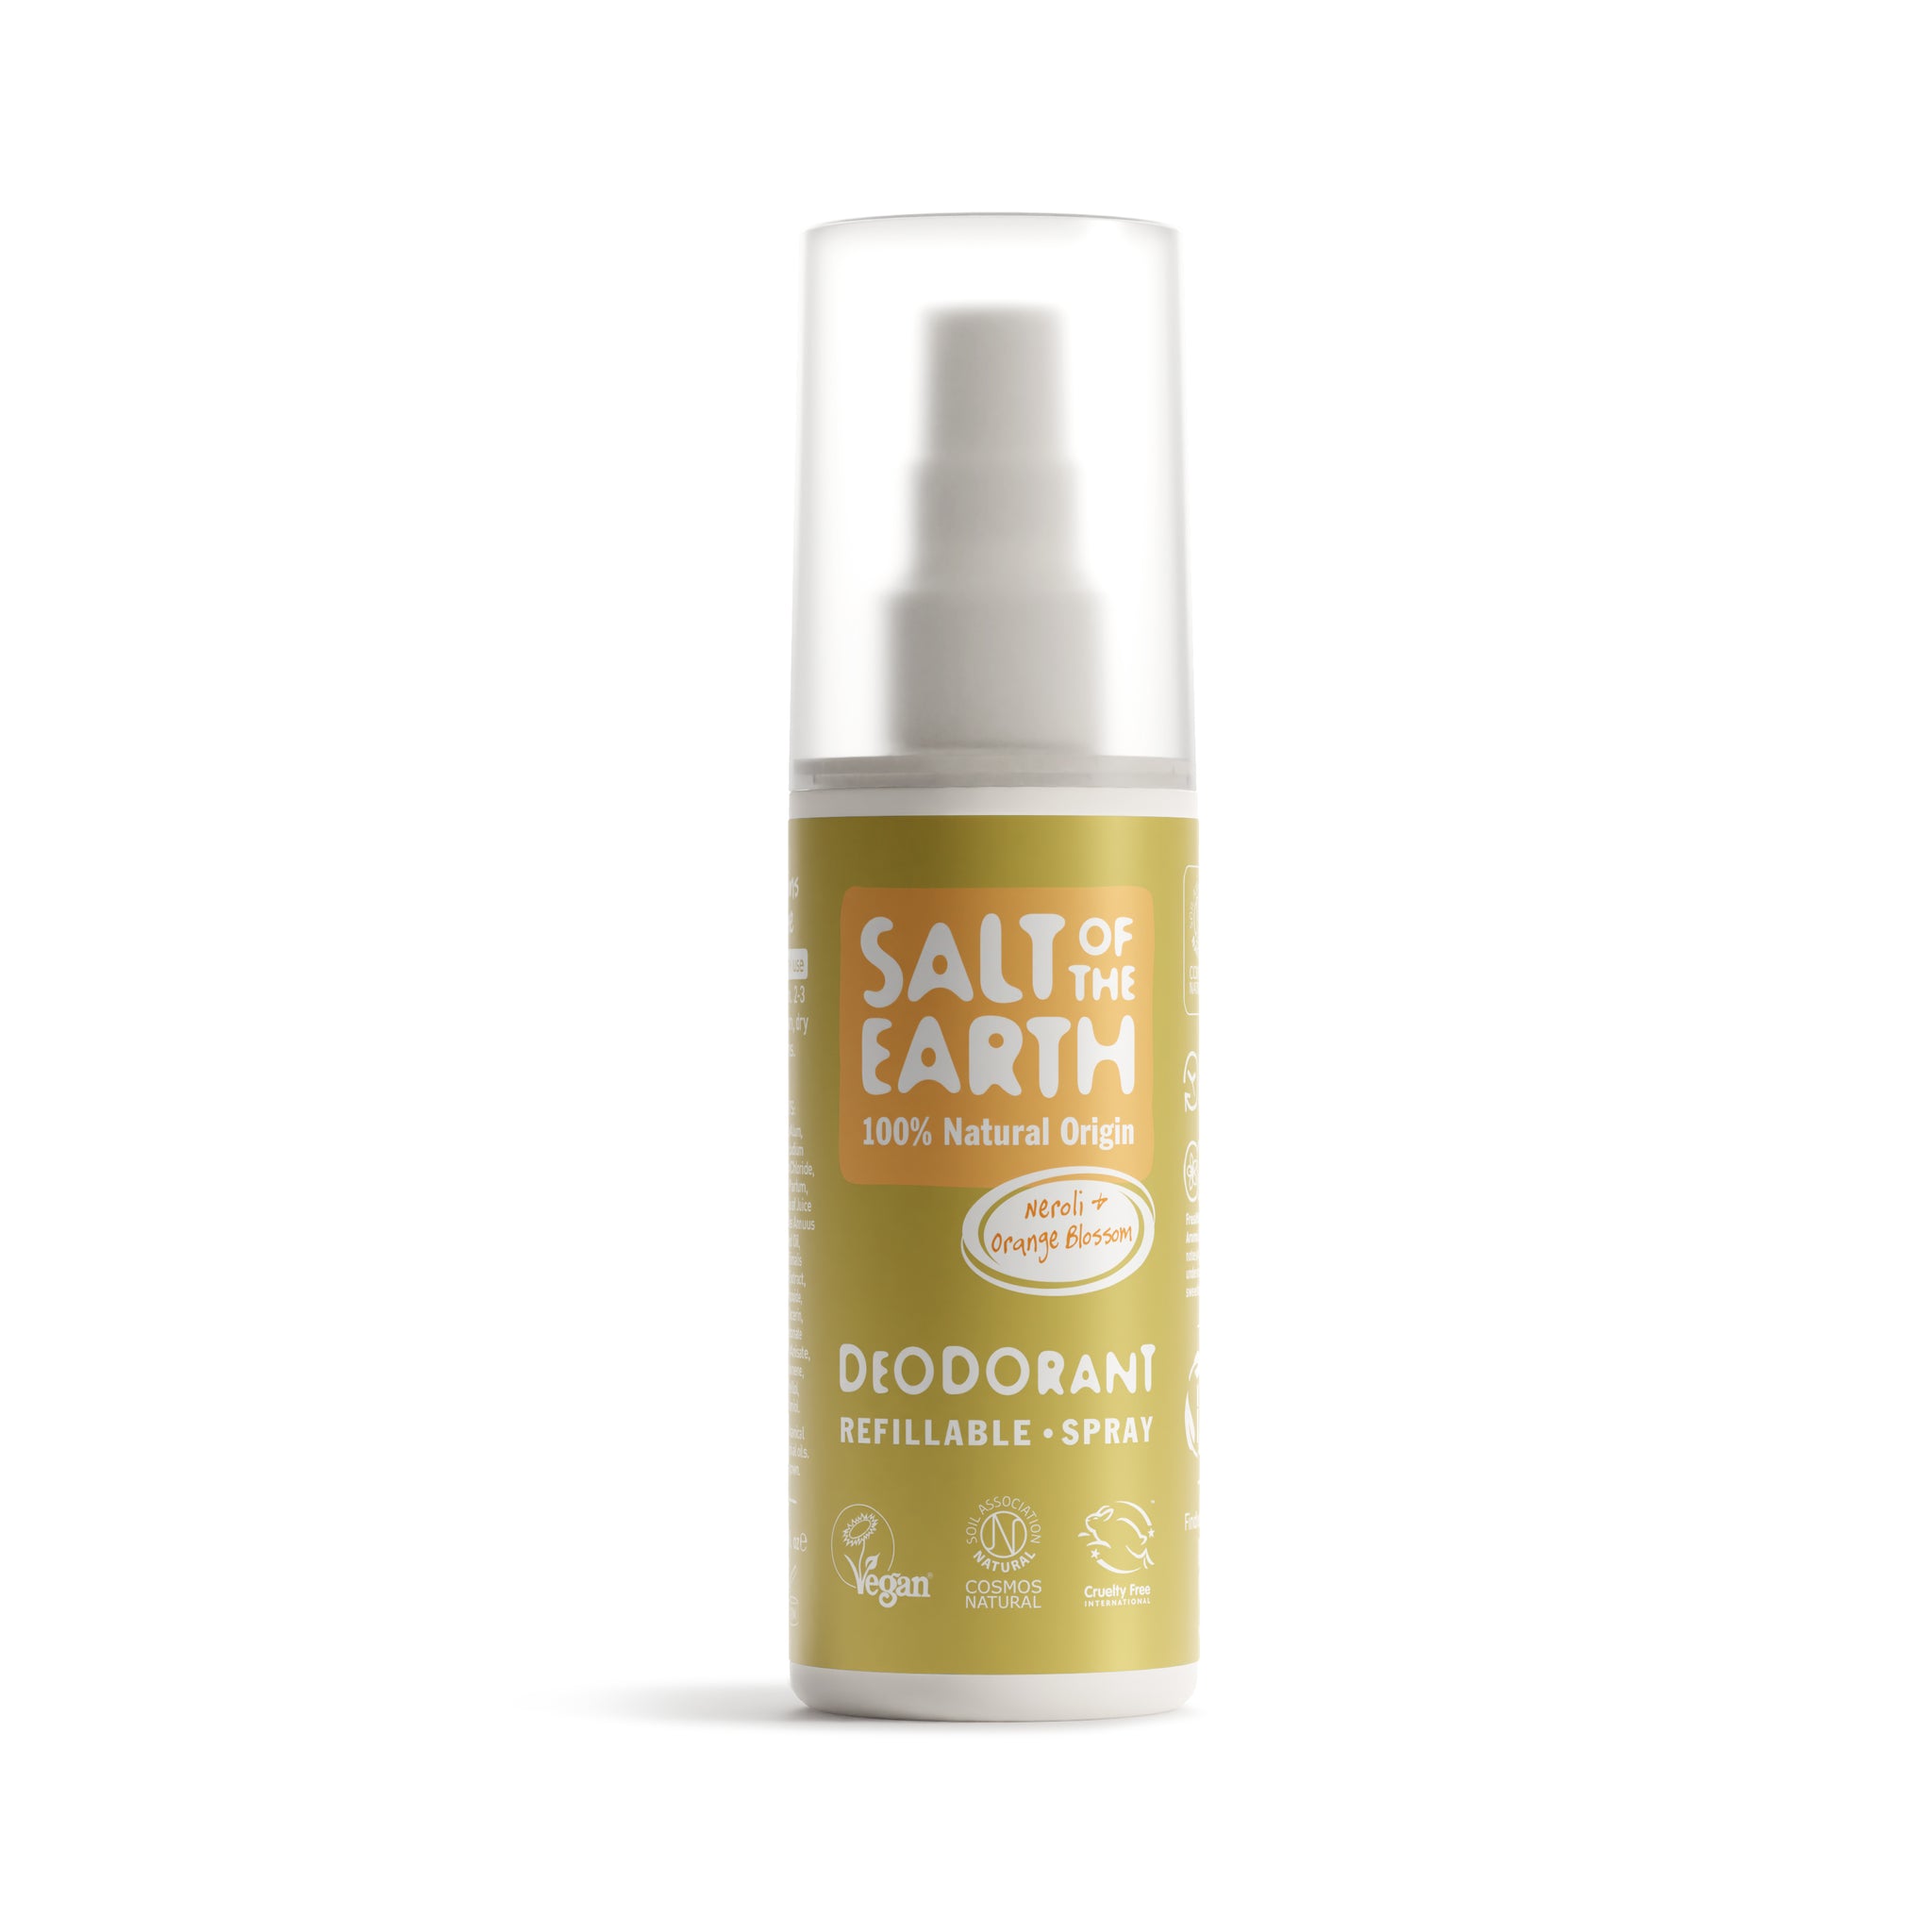 Salt of the Earth Refillable Neroli and Orange Blossom Spray Deodorant